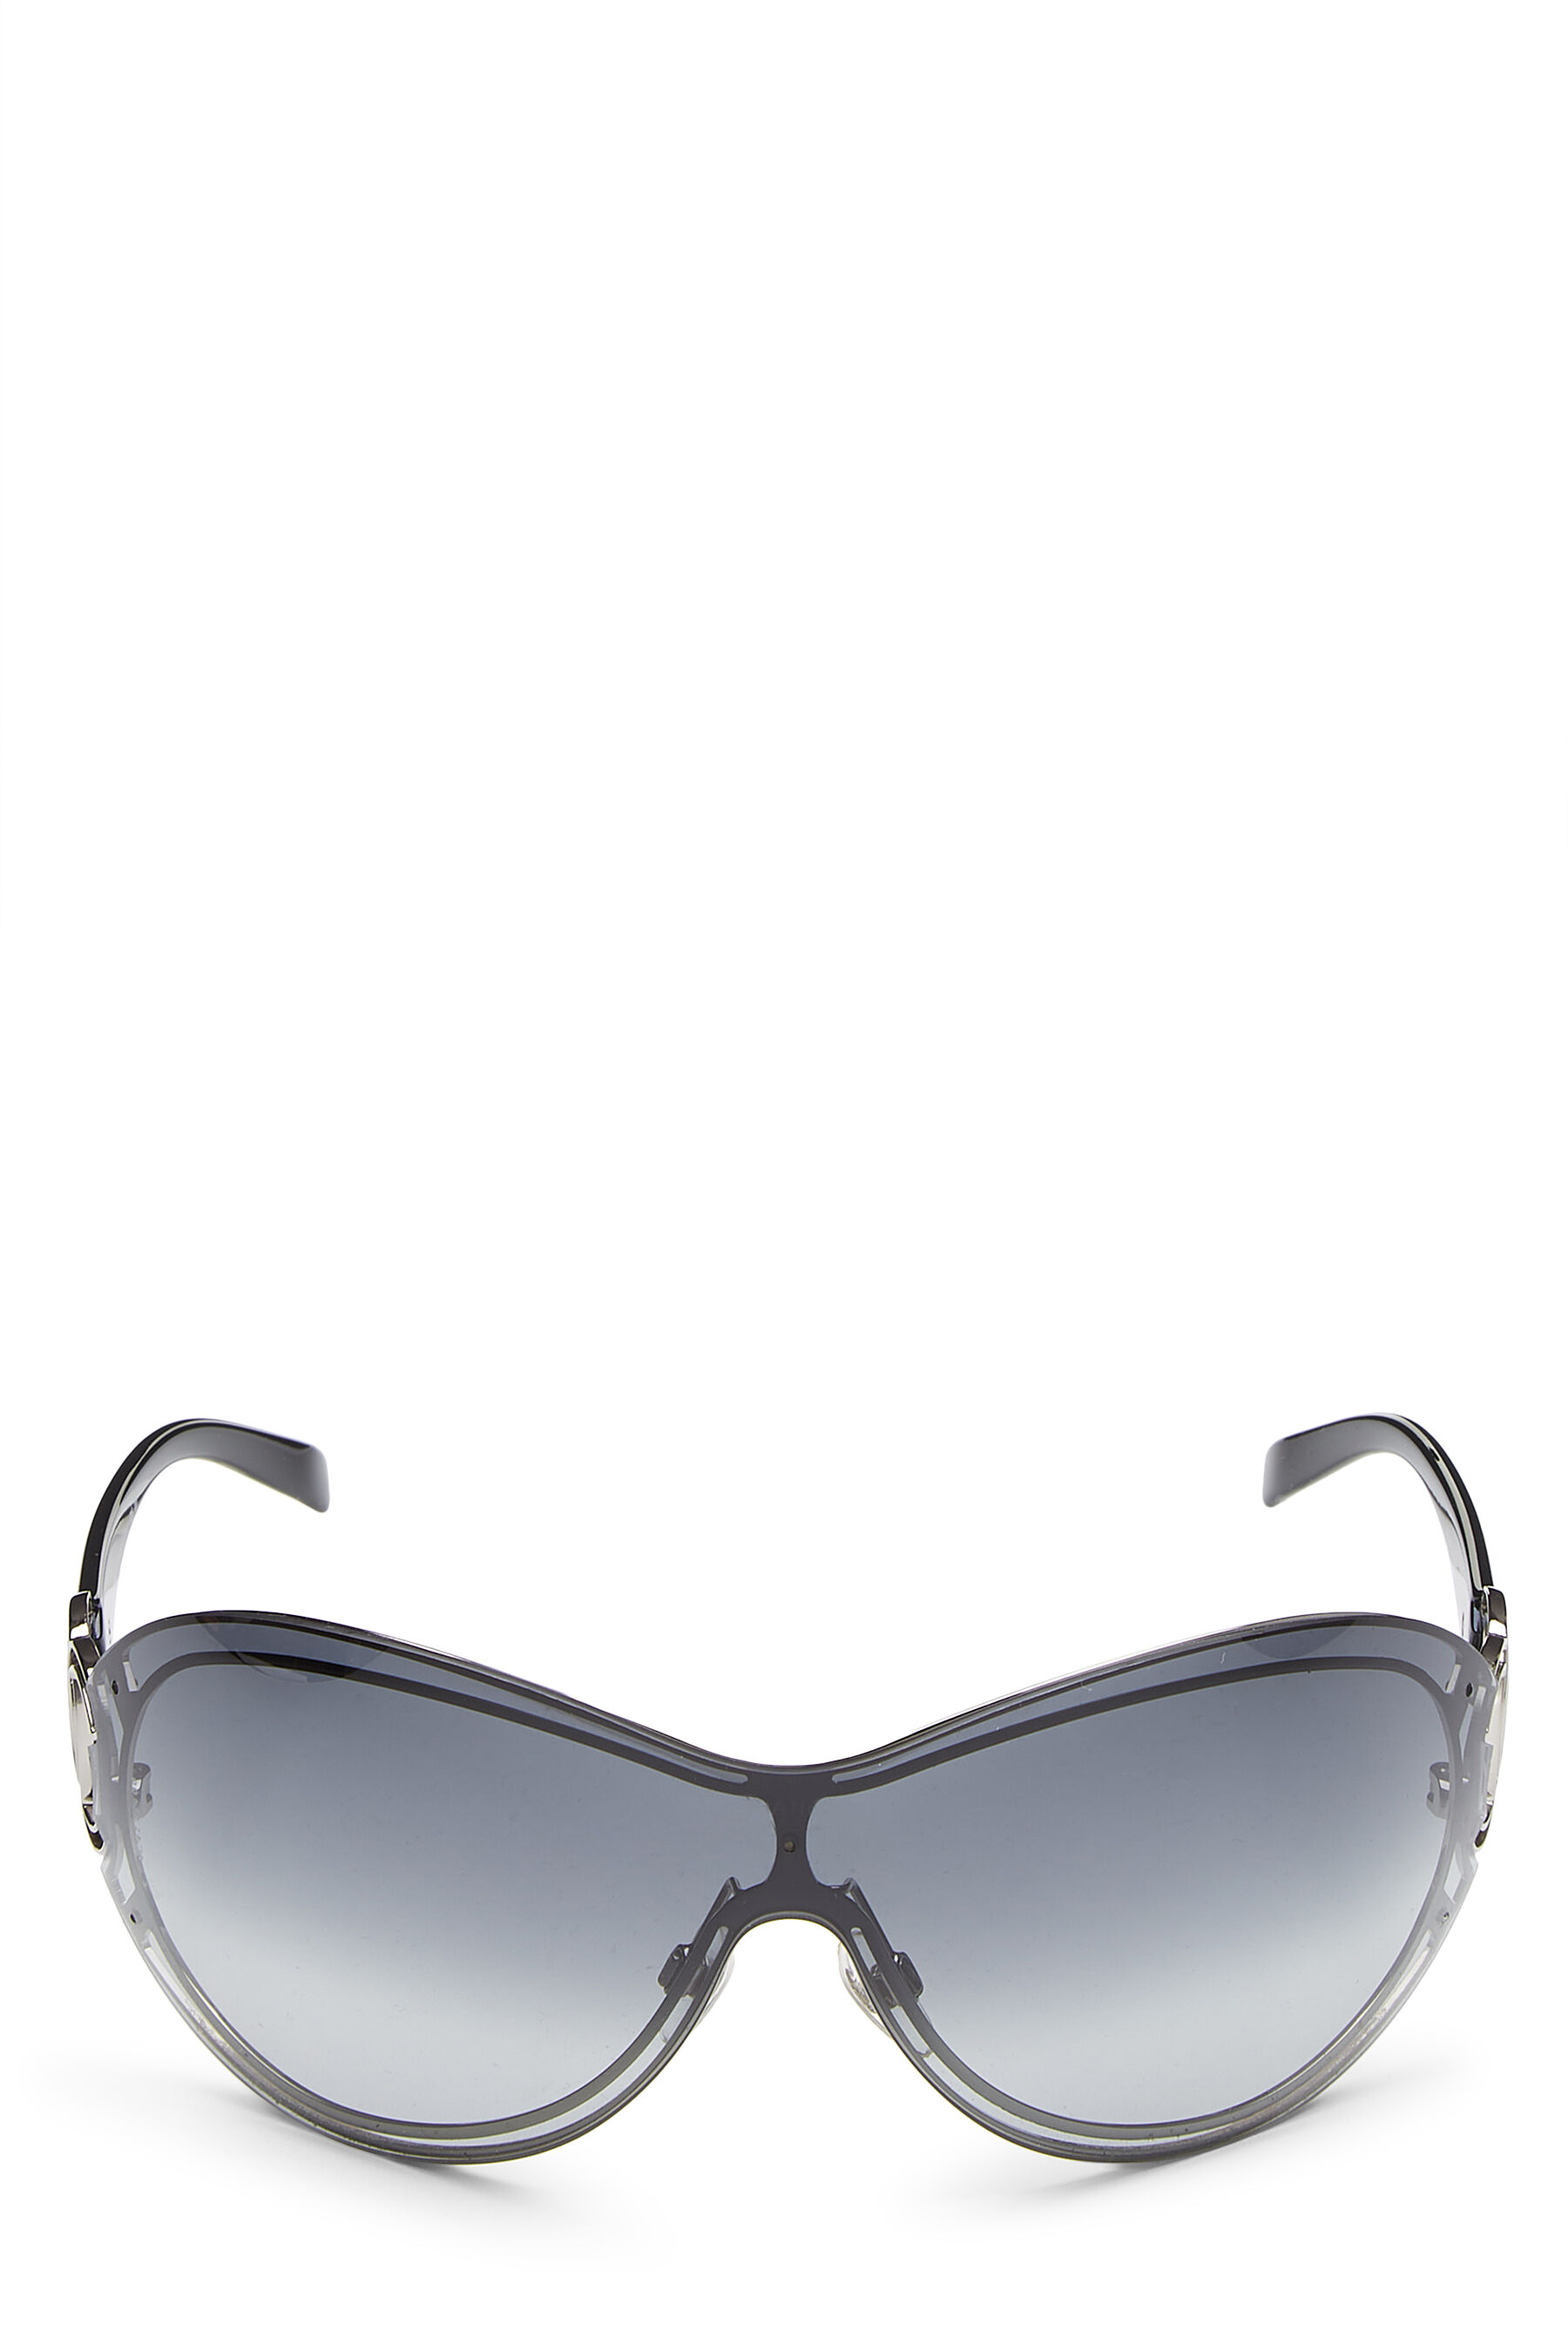 Om indstilling besked støj Chanel Black Acetate & Silver 'CC' Sunglasses Q6A4HM1RKB000 | WGACA